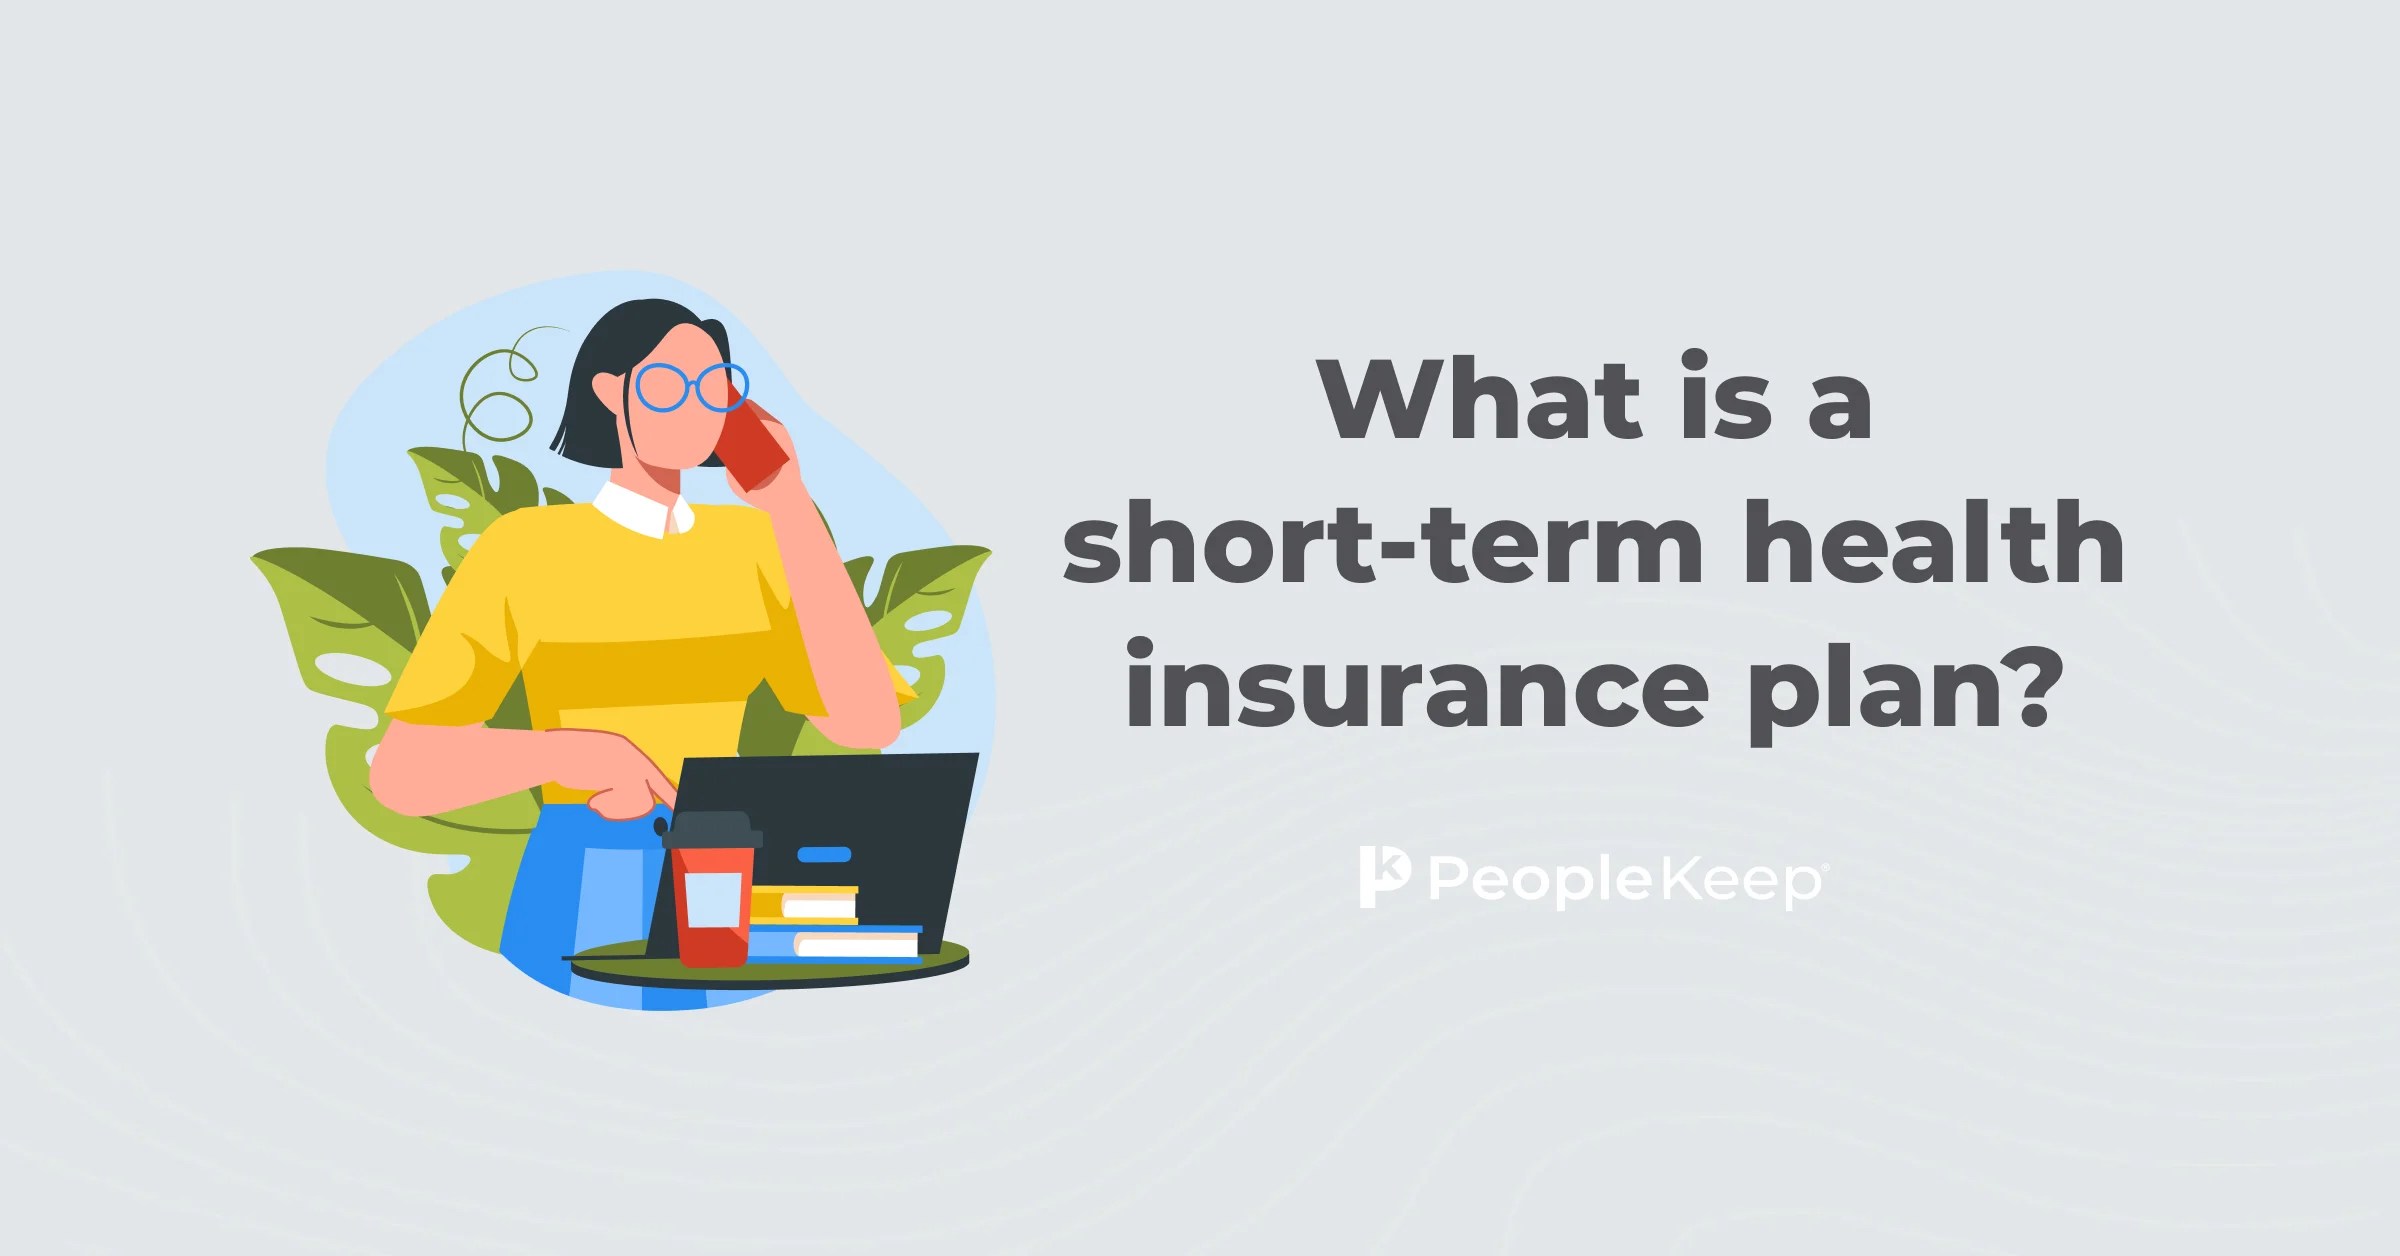 Short Term Insurance